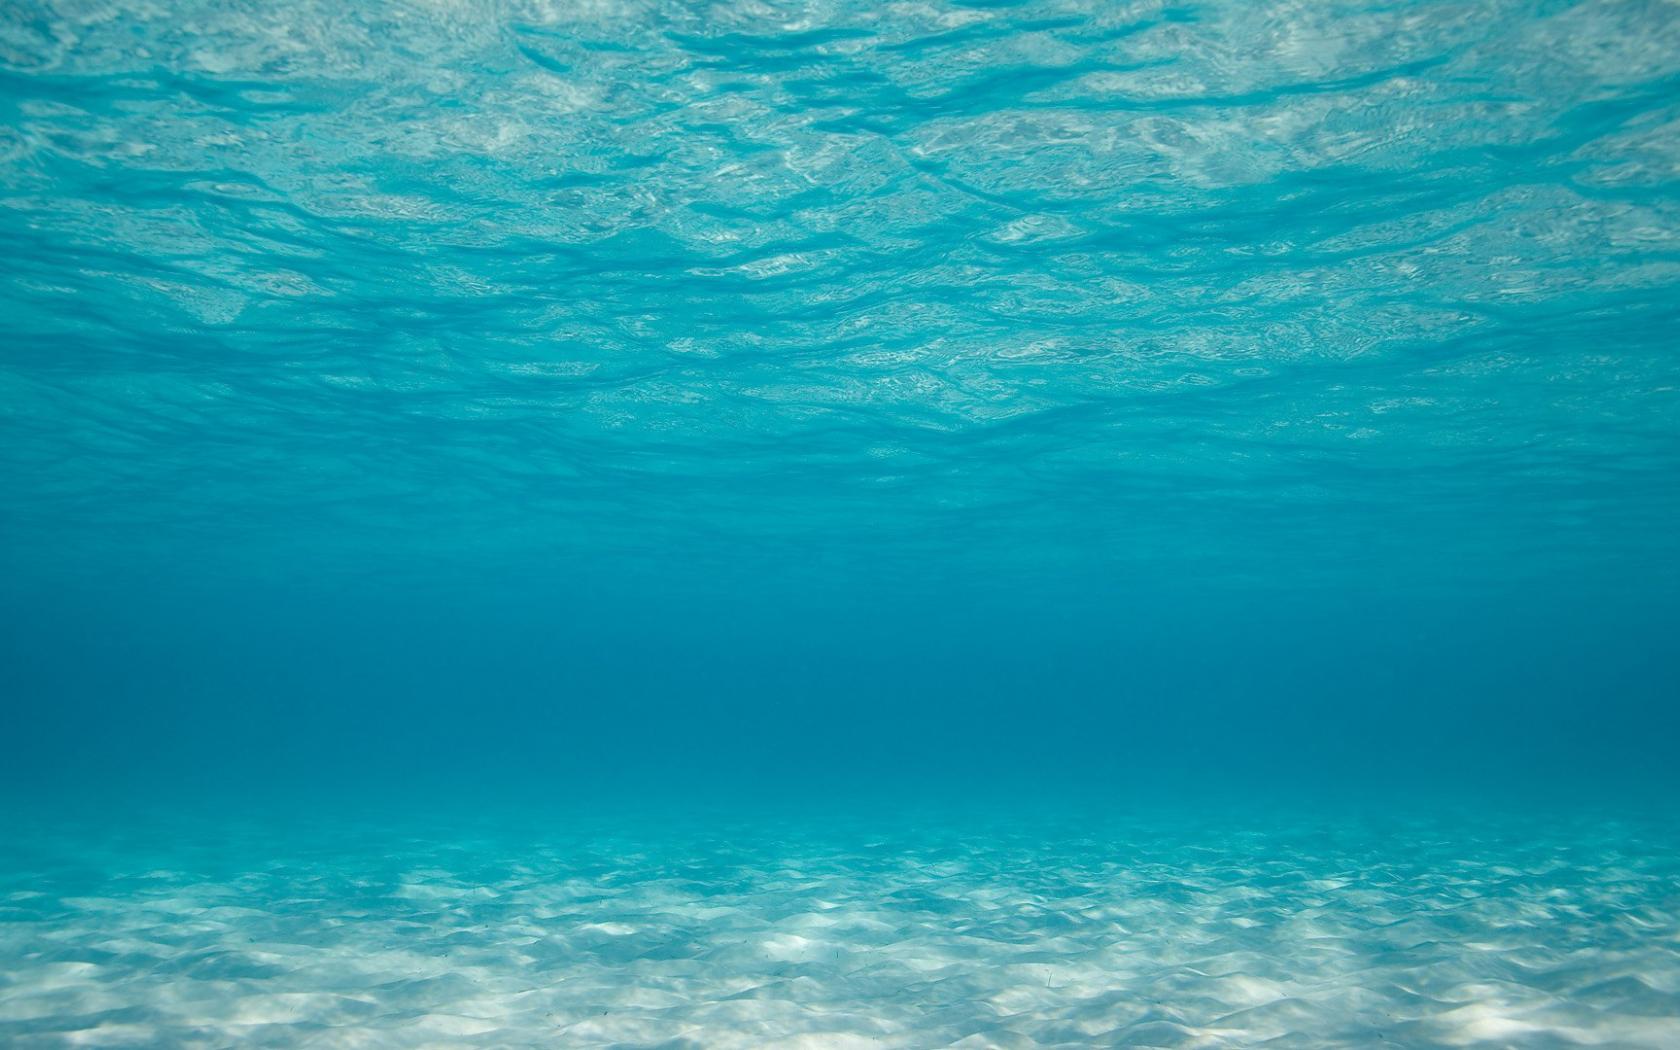 Underwater images